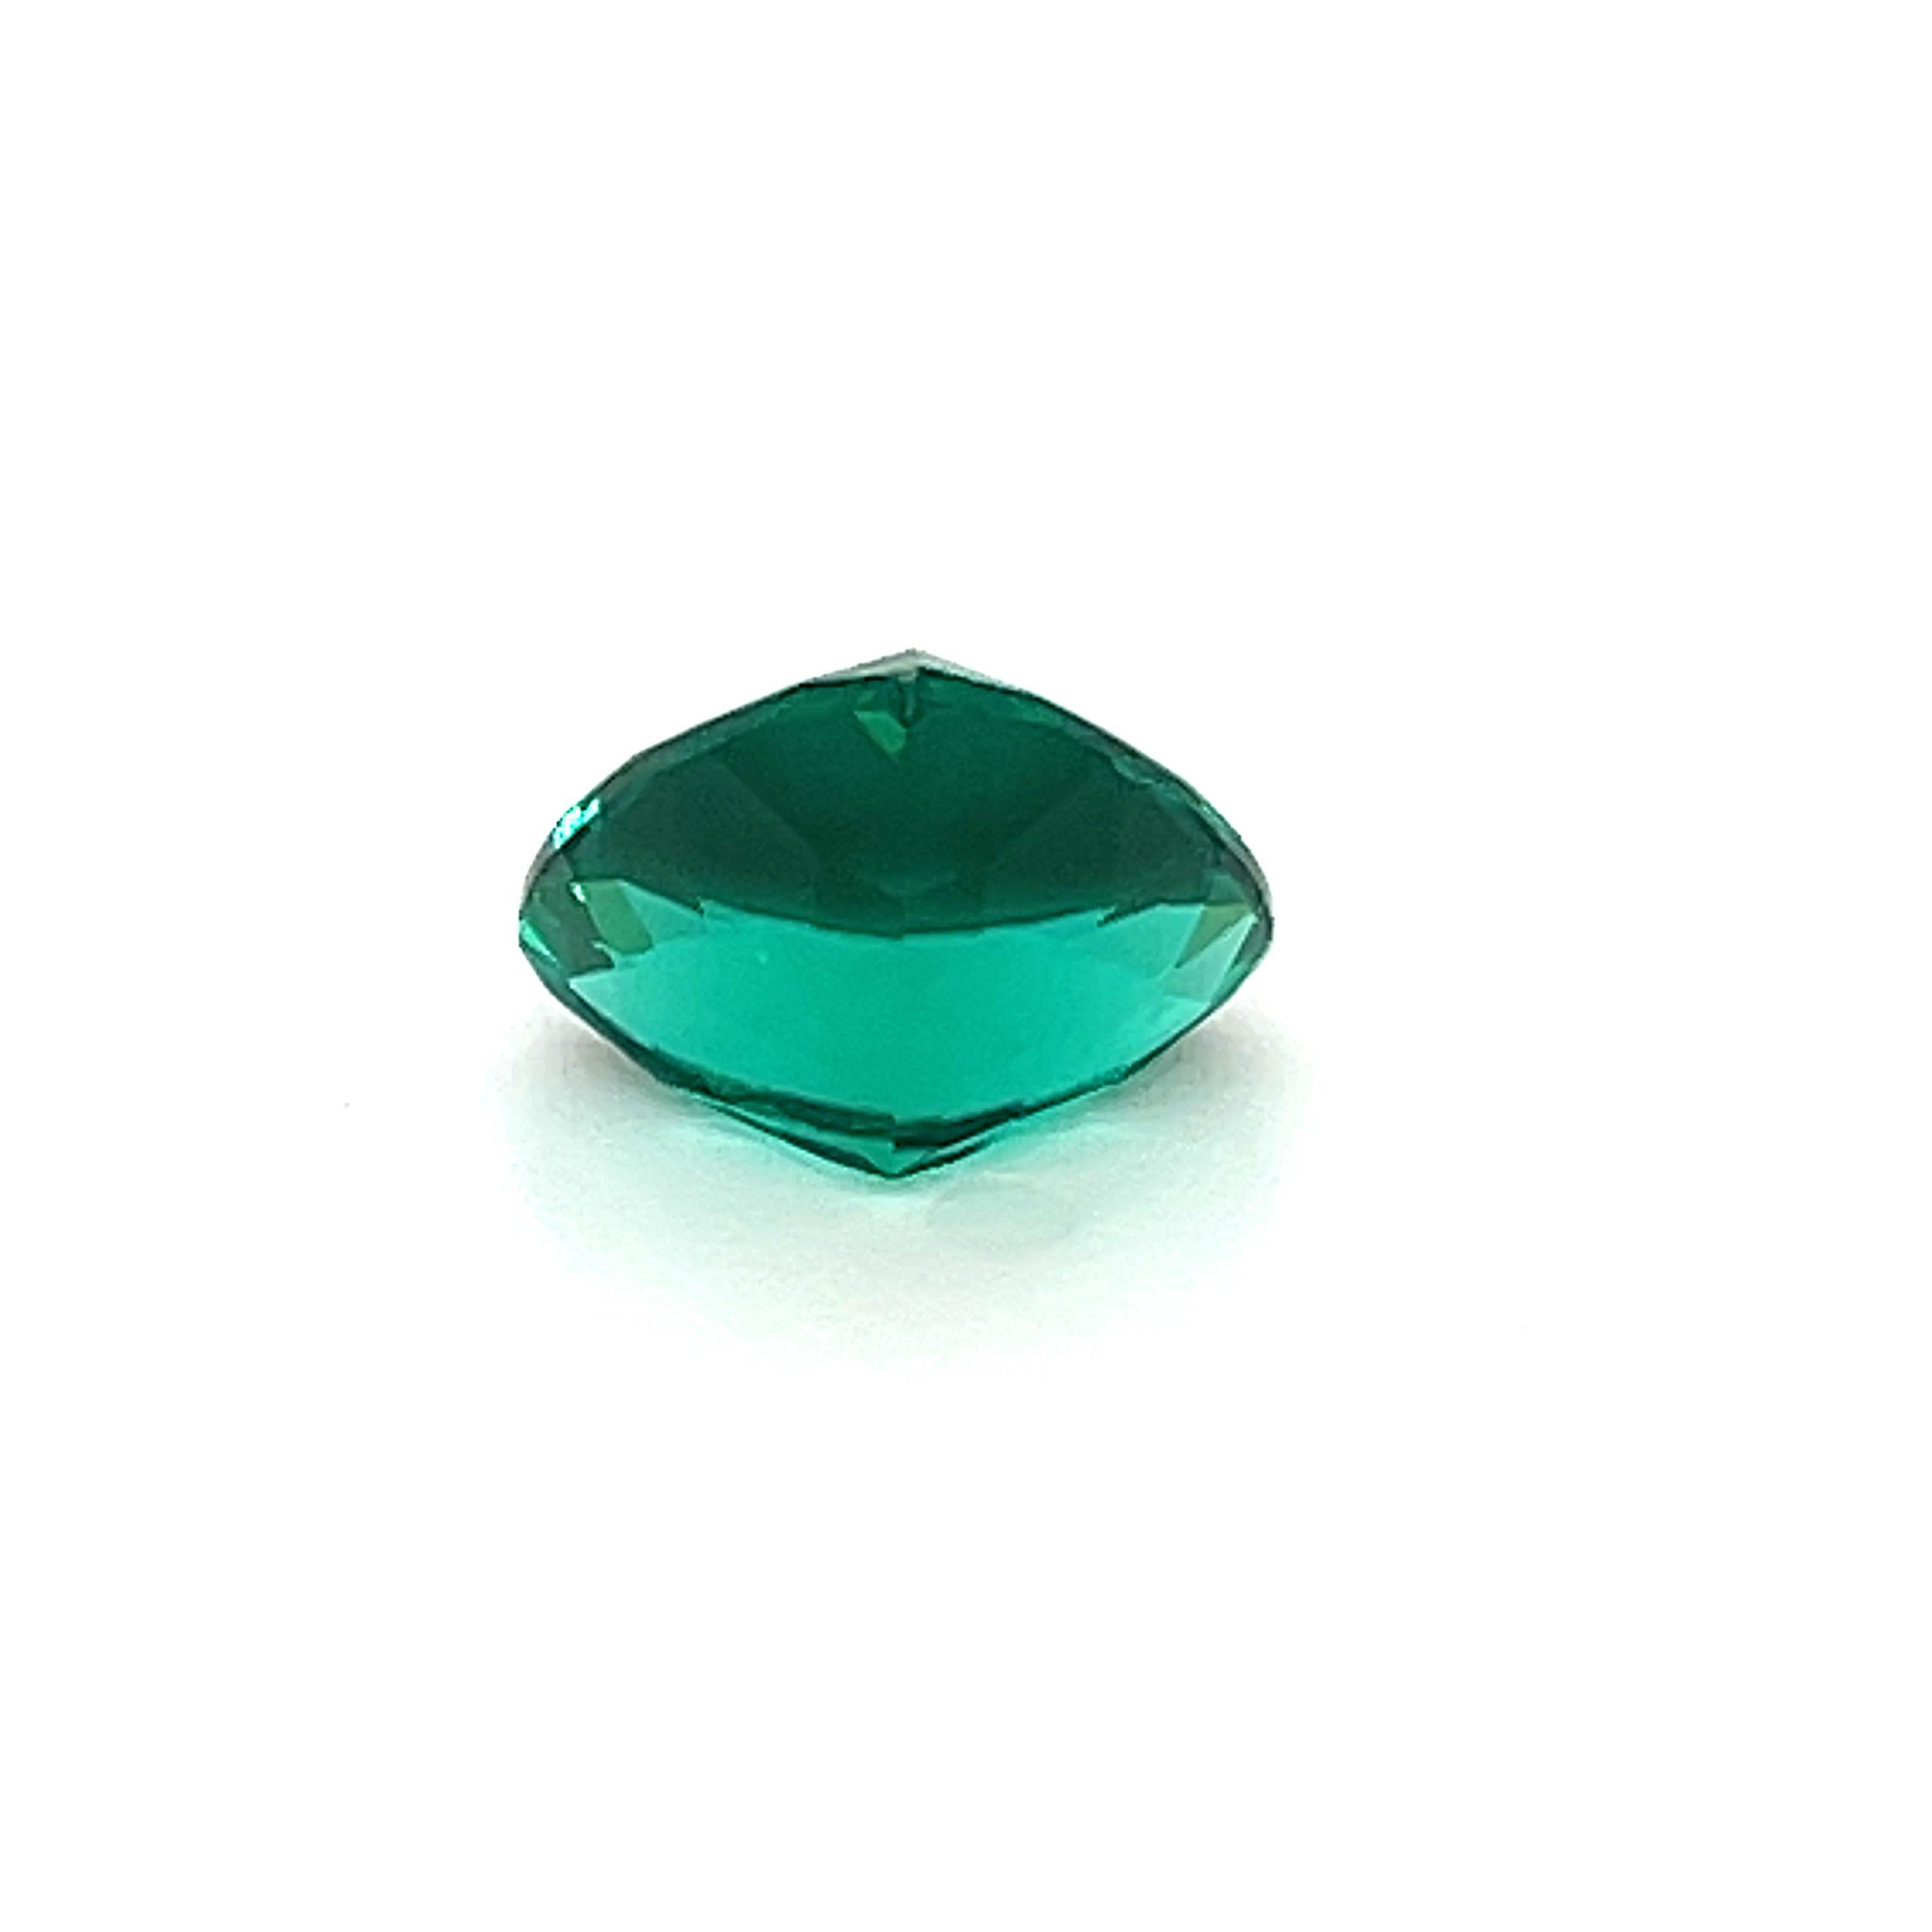 3.06ct Chrome Tourmaline Trillion cut
Color: Vivid Bluish Green
Provenance: Tanzania
Dimensions: 10.27 x 9.90 x 5.58mm
Clarity: Flawless
